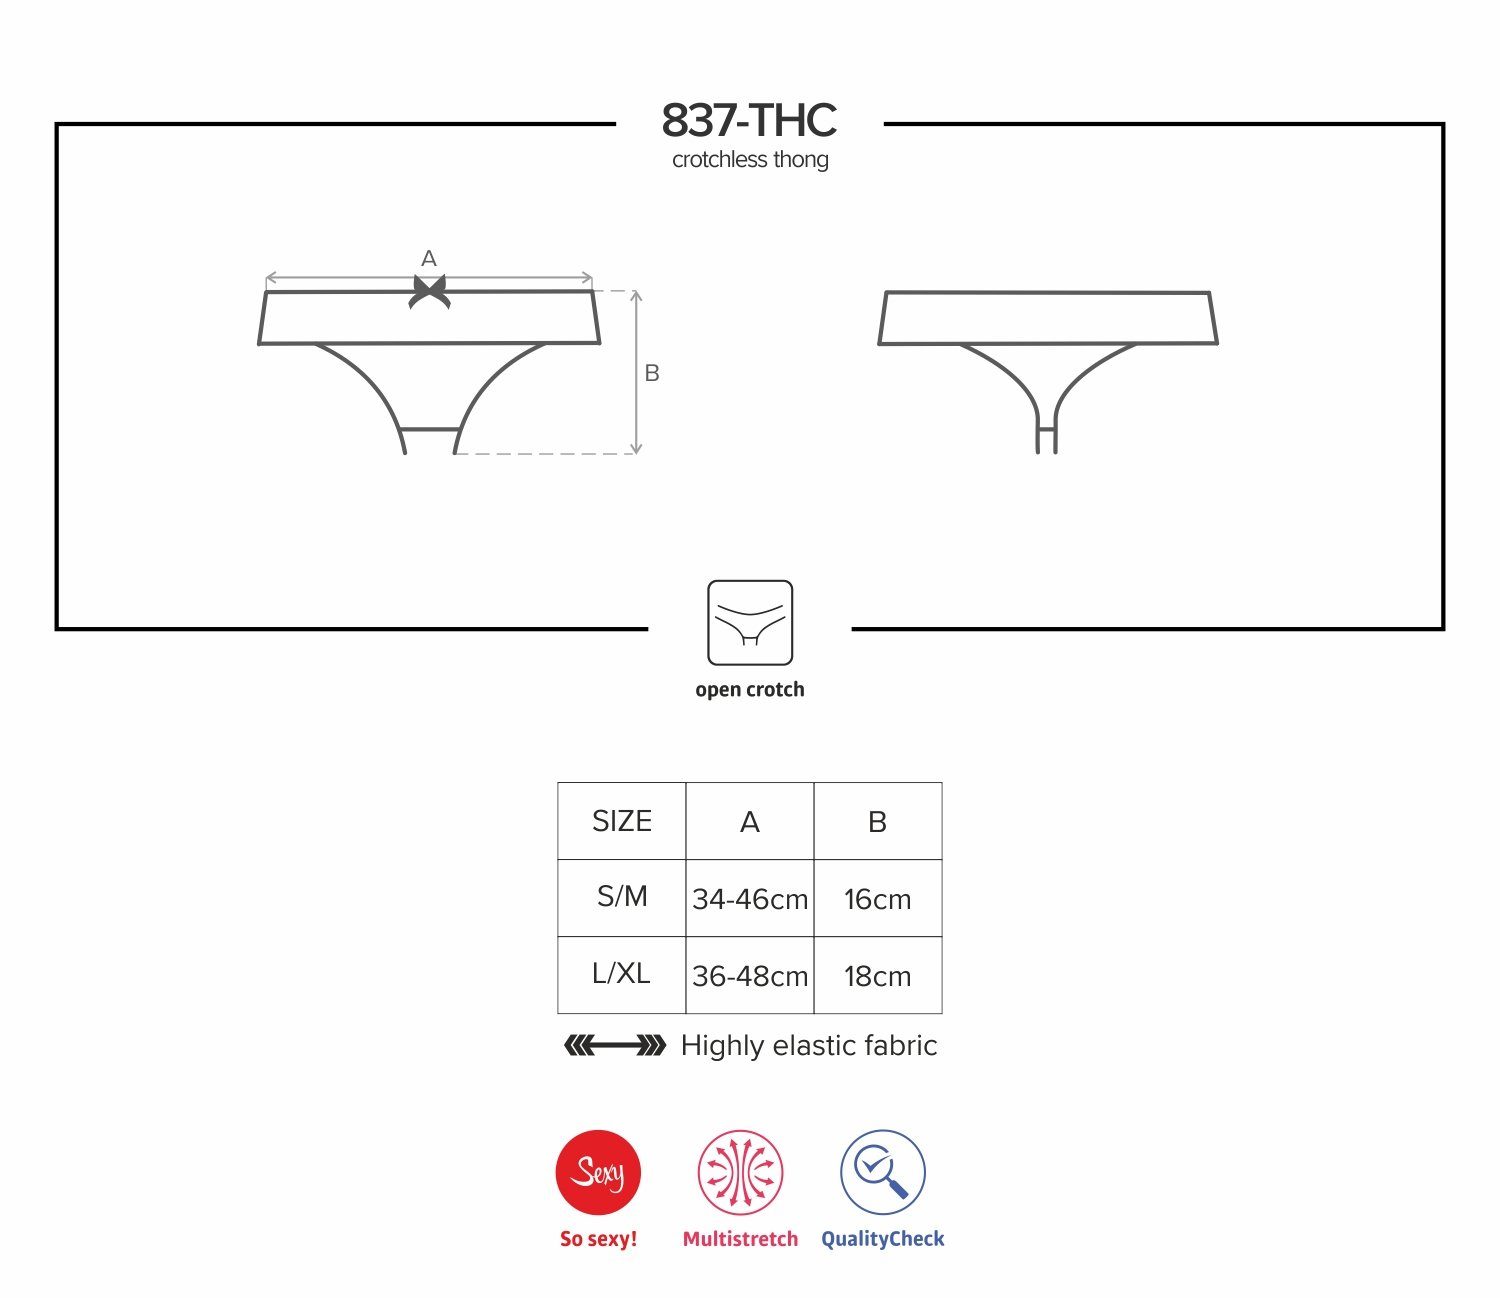 Dessous String schwarz (einzel, 1-St) Panty-Ouvert Offener Obsessive Thong Open transparent